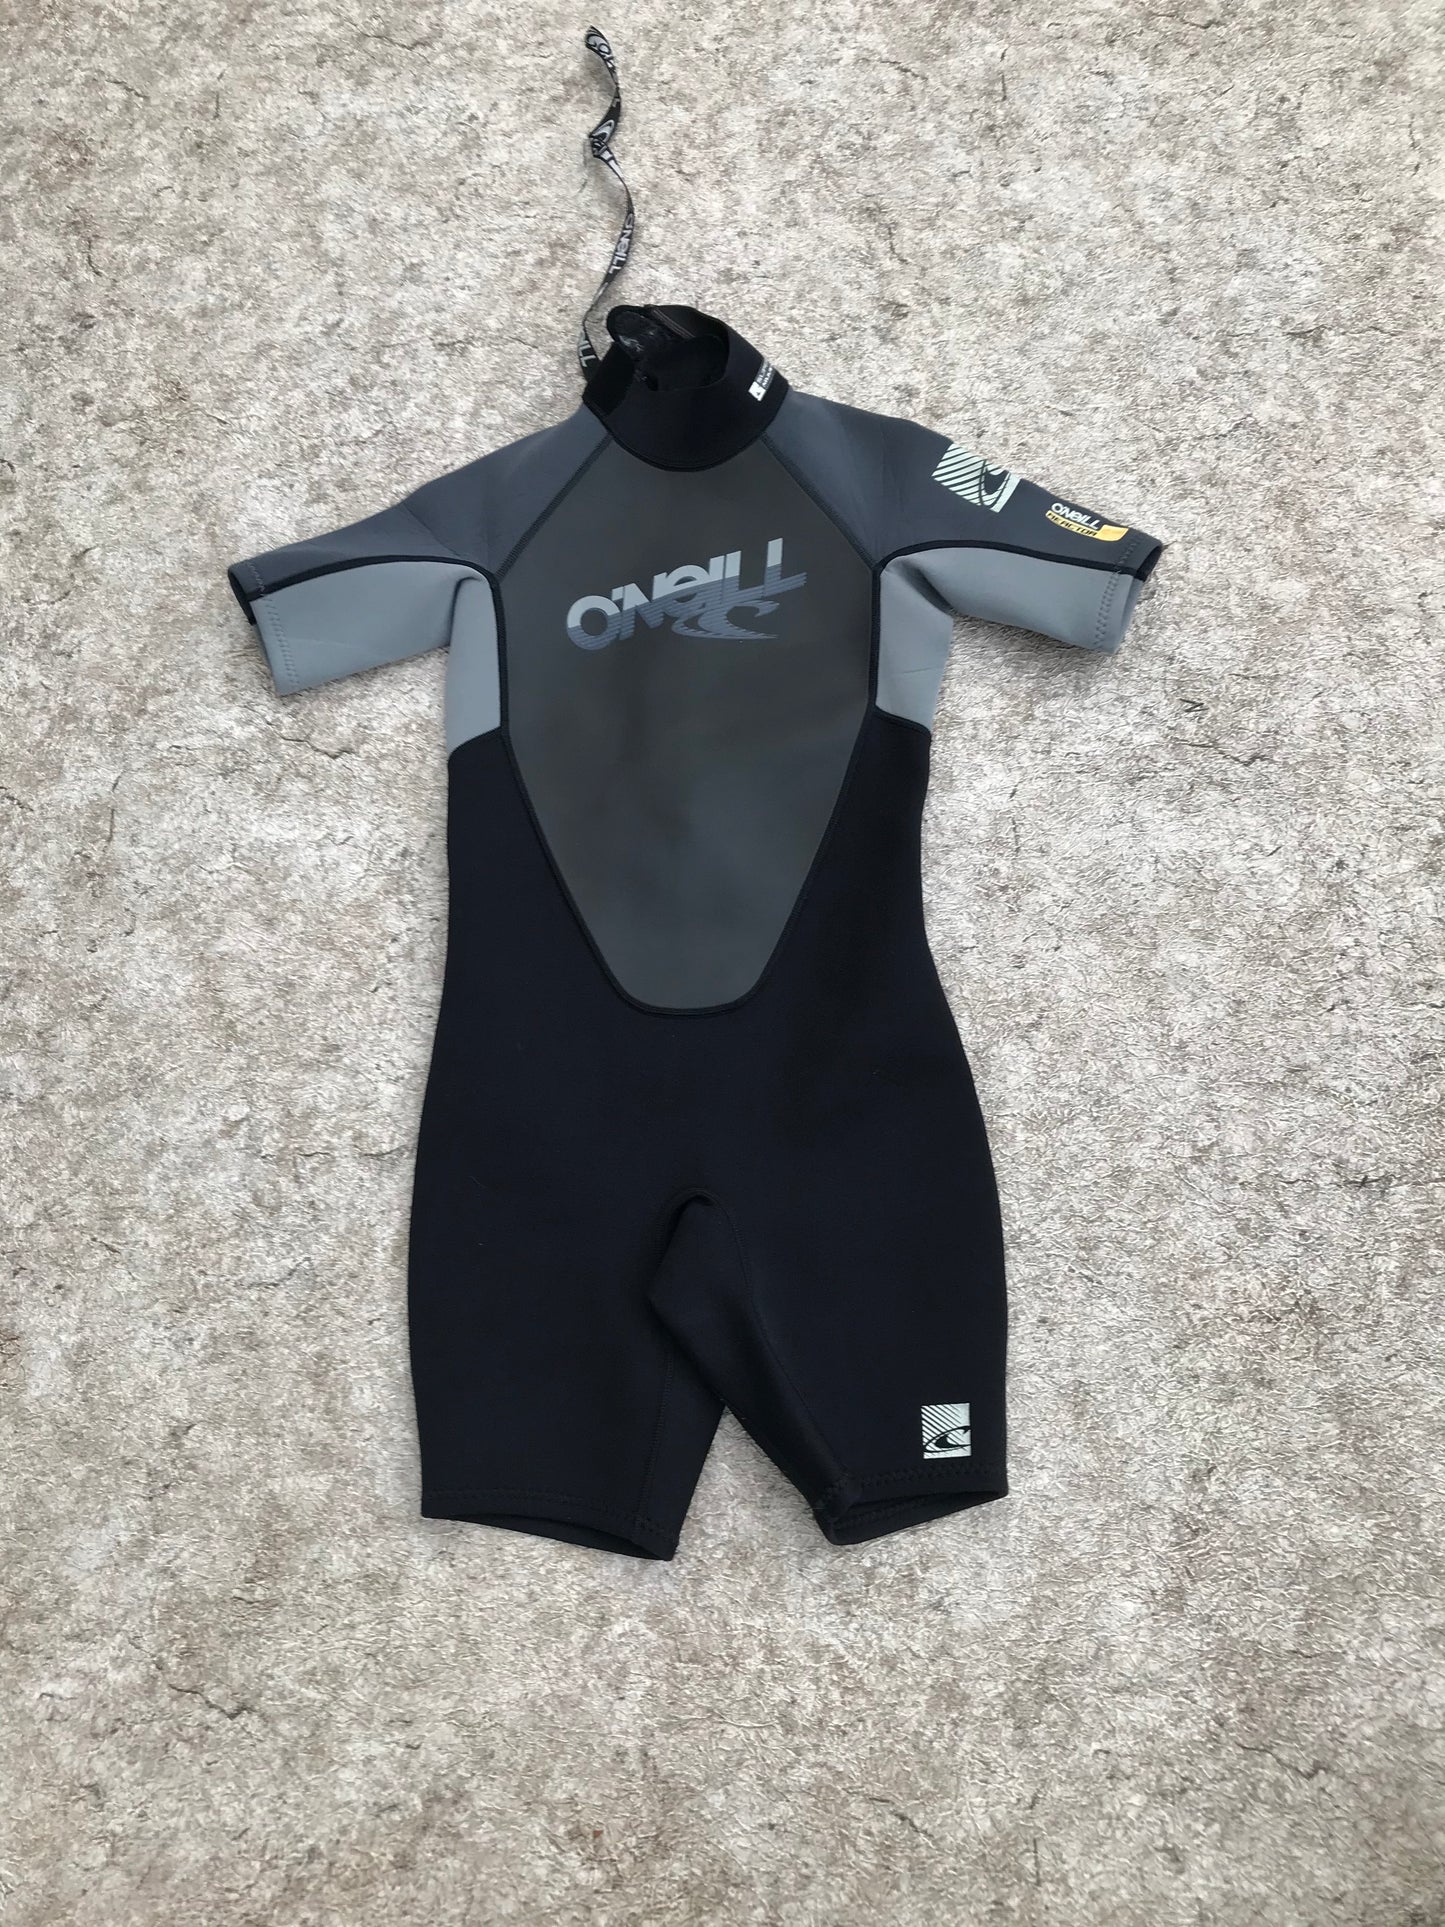 Wetsuit Child Size 12 Oneill Black Grey 2-3 mm Neoprene Excellent